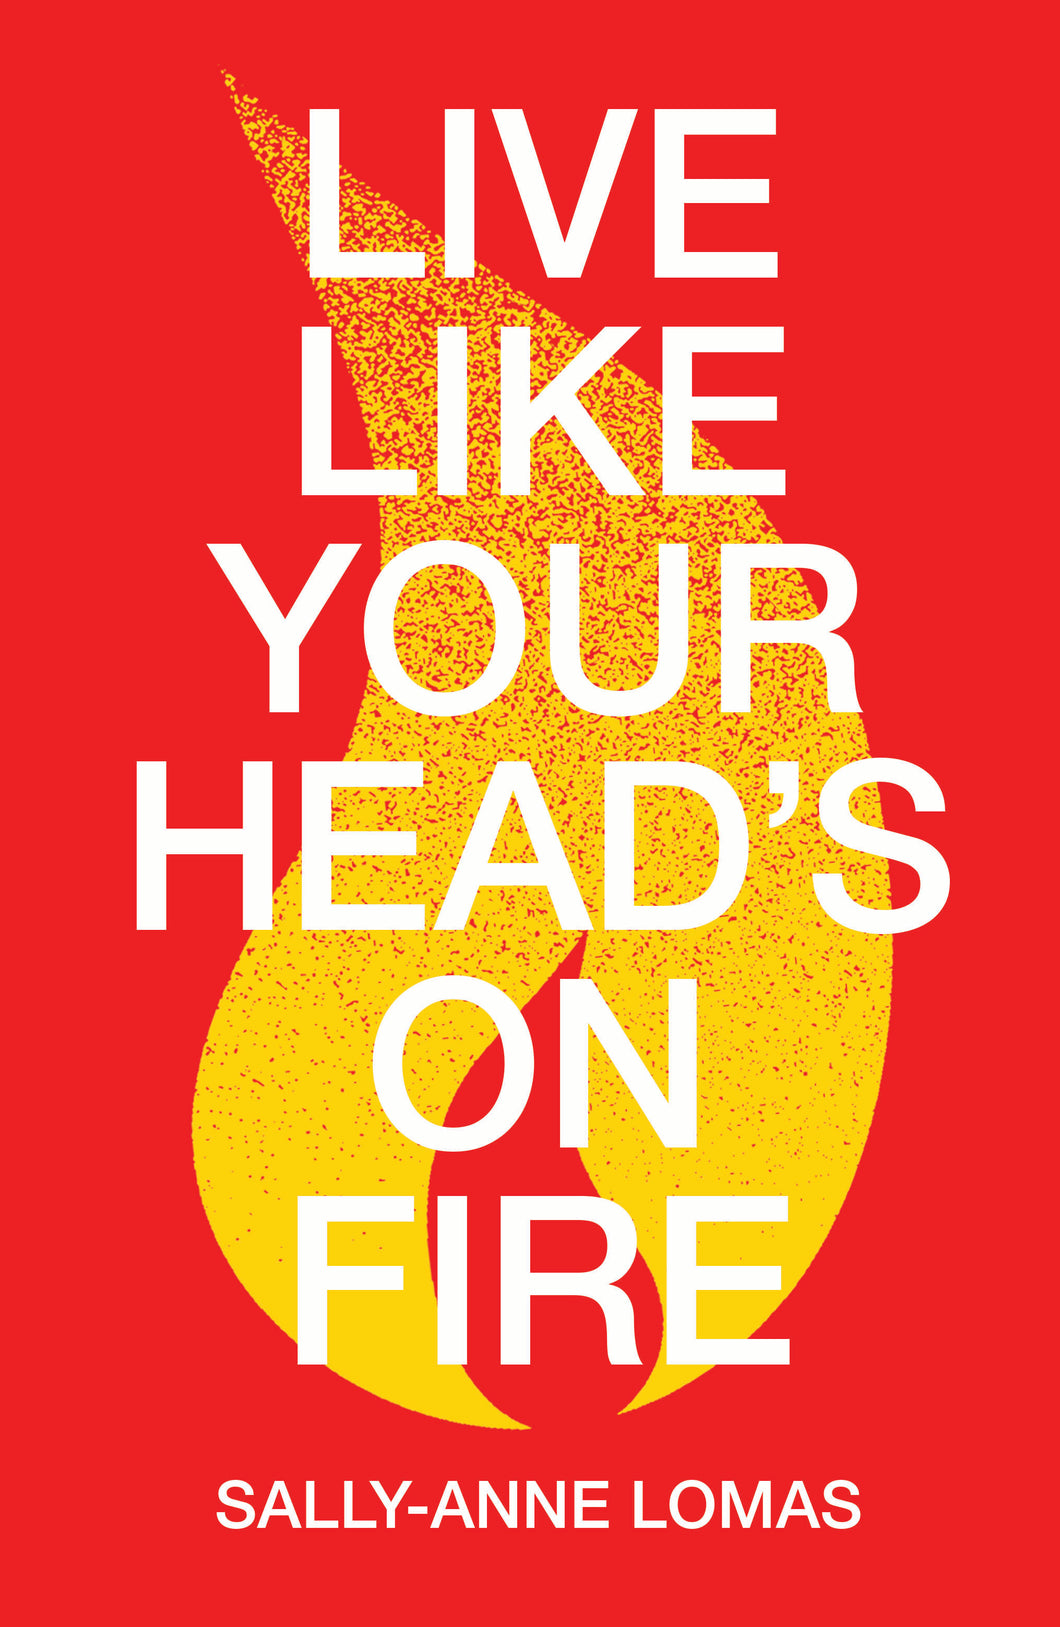 Live Like Your Head's On Fire